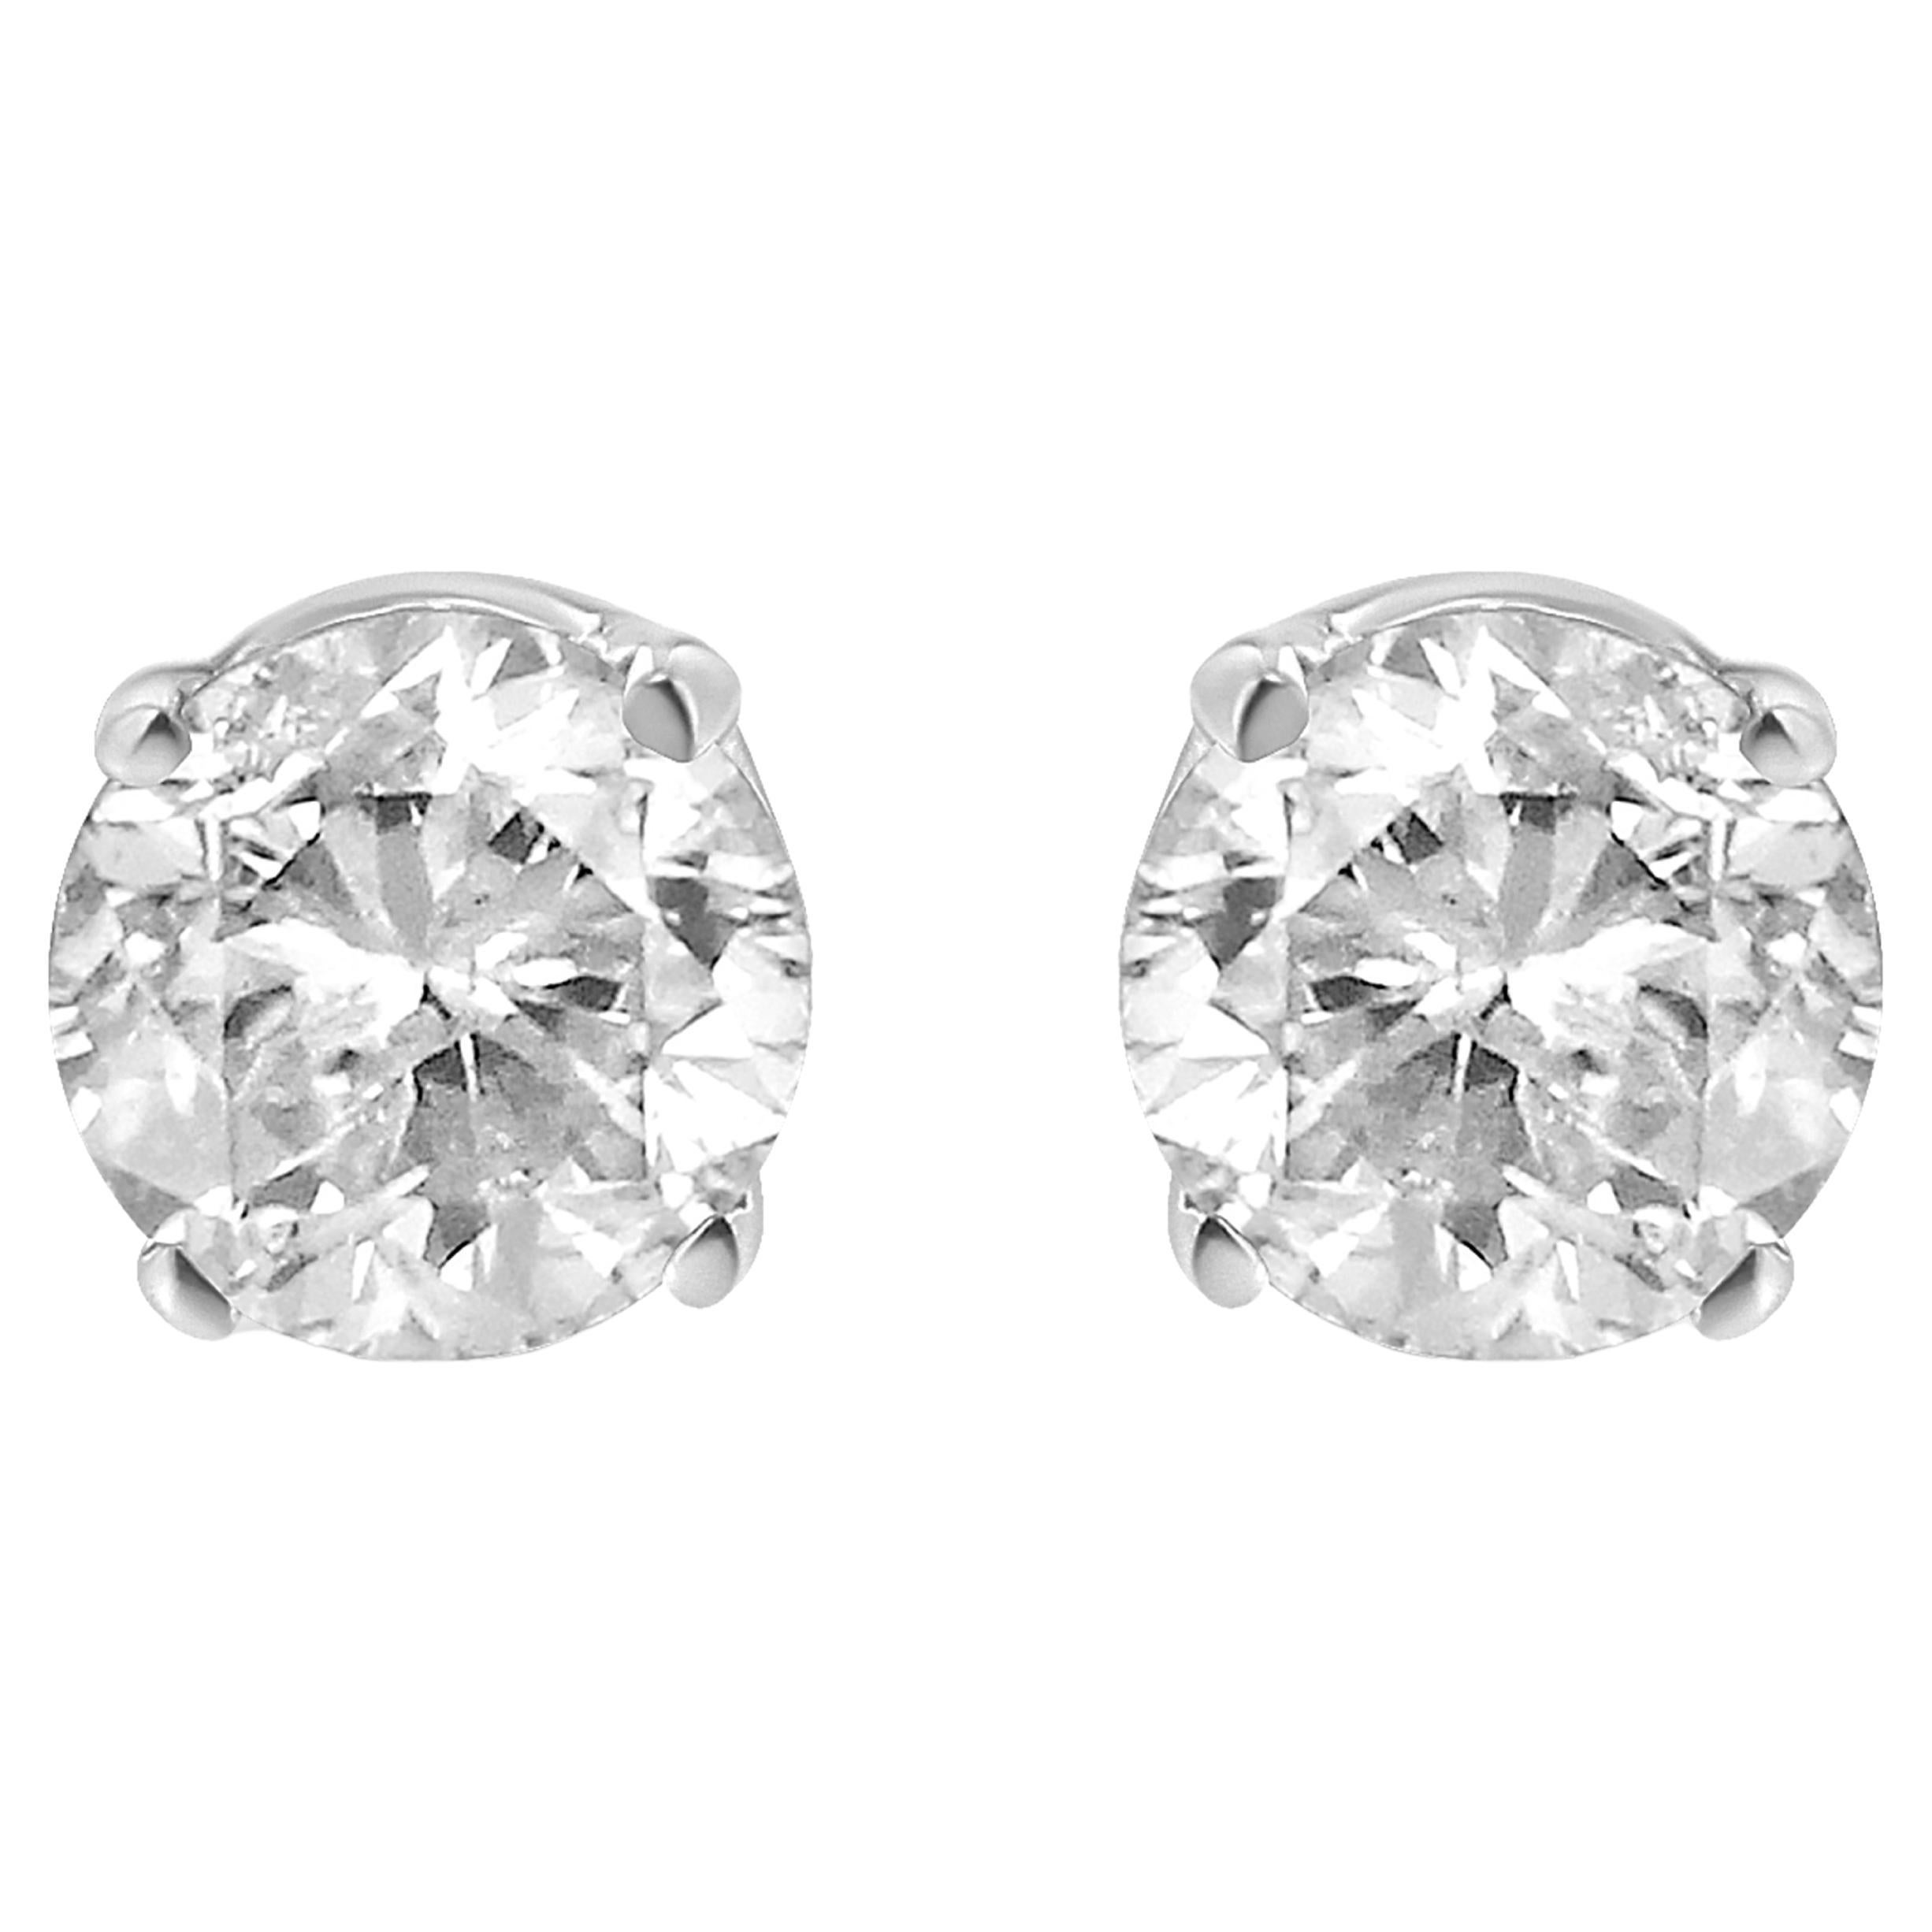 AGS Certified 14K White Gold 1.00 Carat Diamond Push Back Stud Earrings